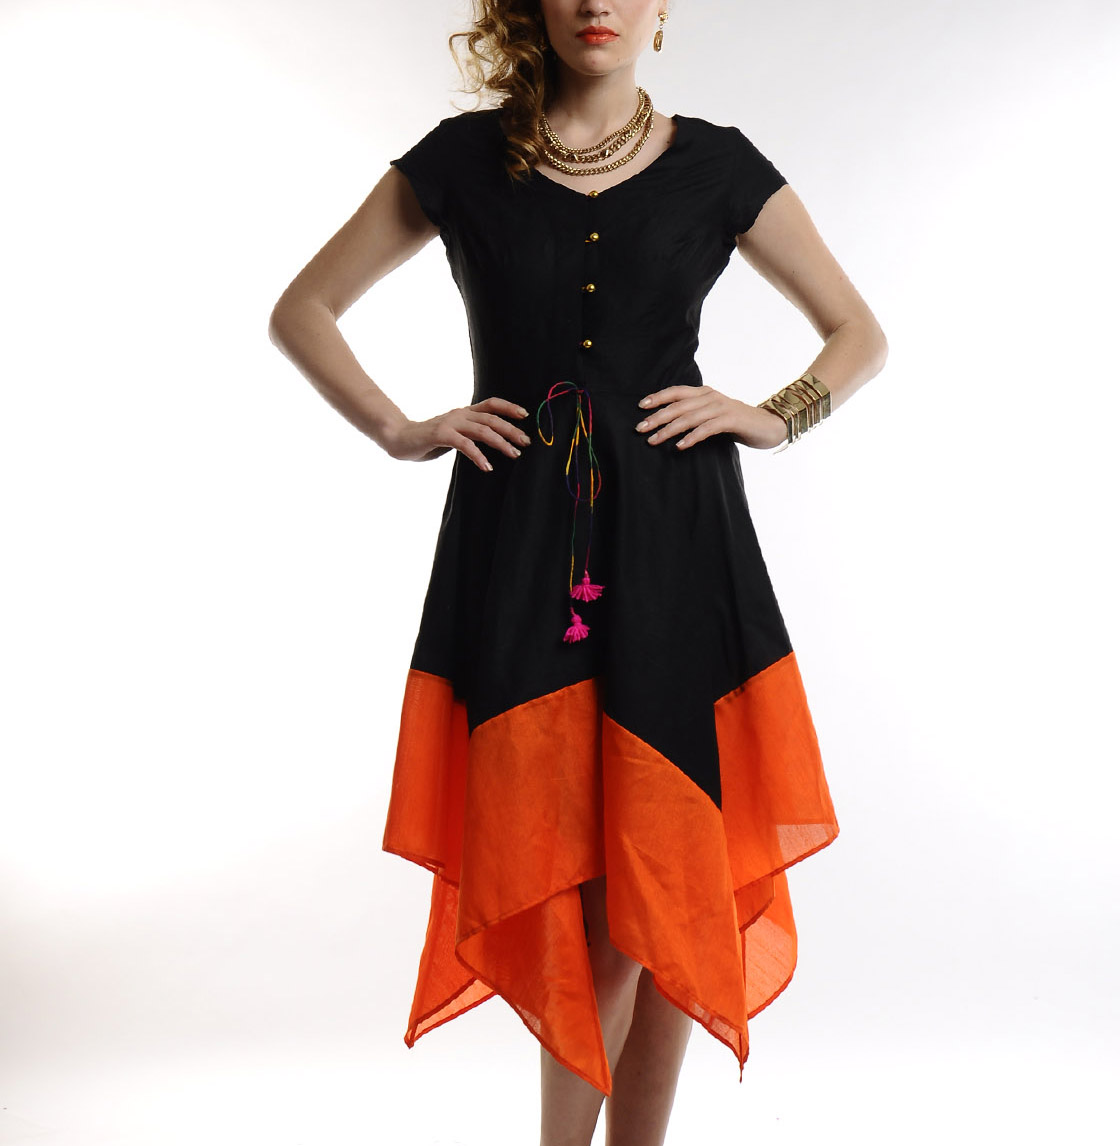 Black dress with asymmetric hemline by ANS | The Secret Label